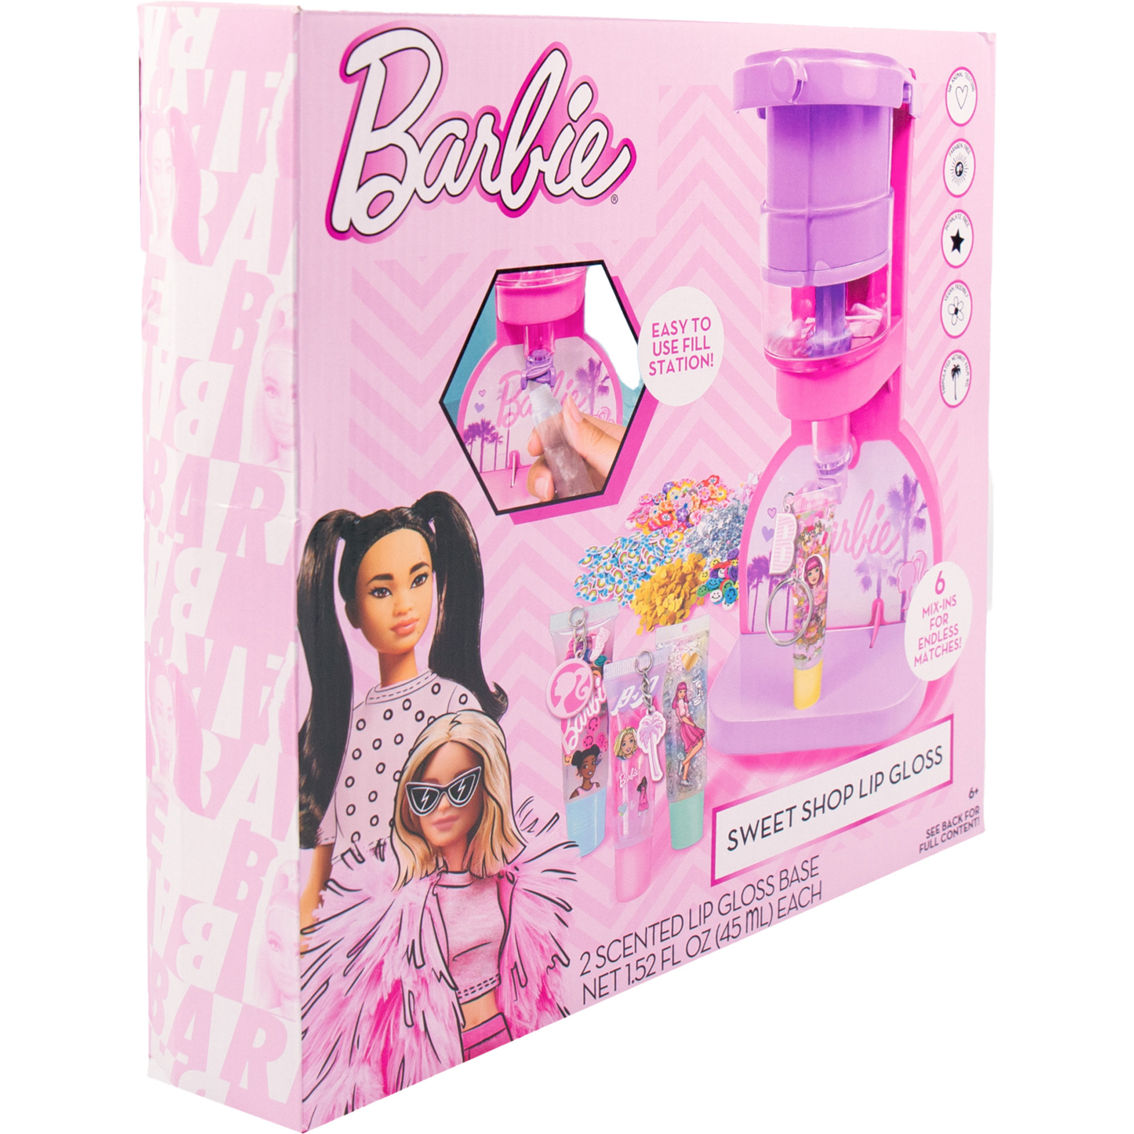 Barbie Sweet Shop Lip Gloss - Image 2 of 4